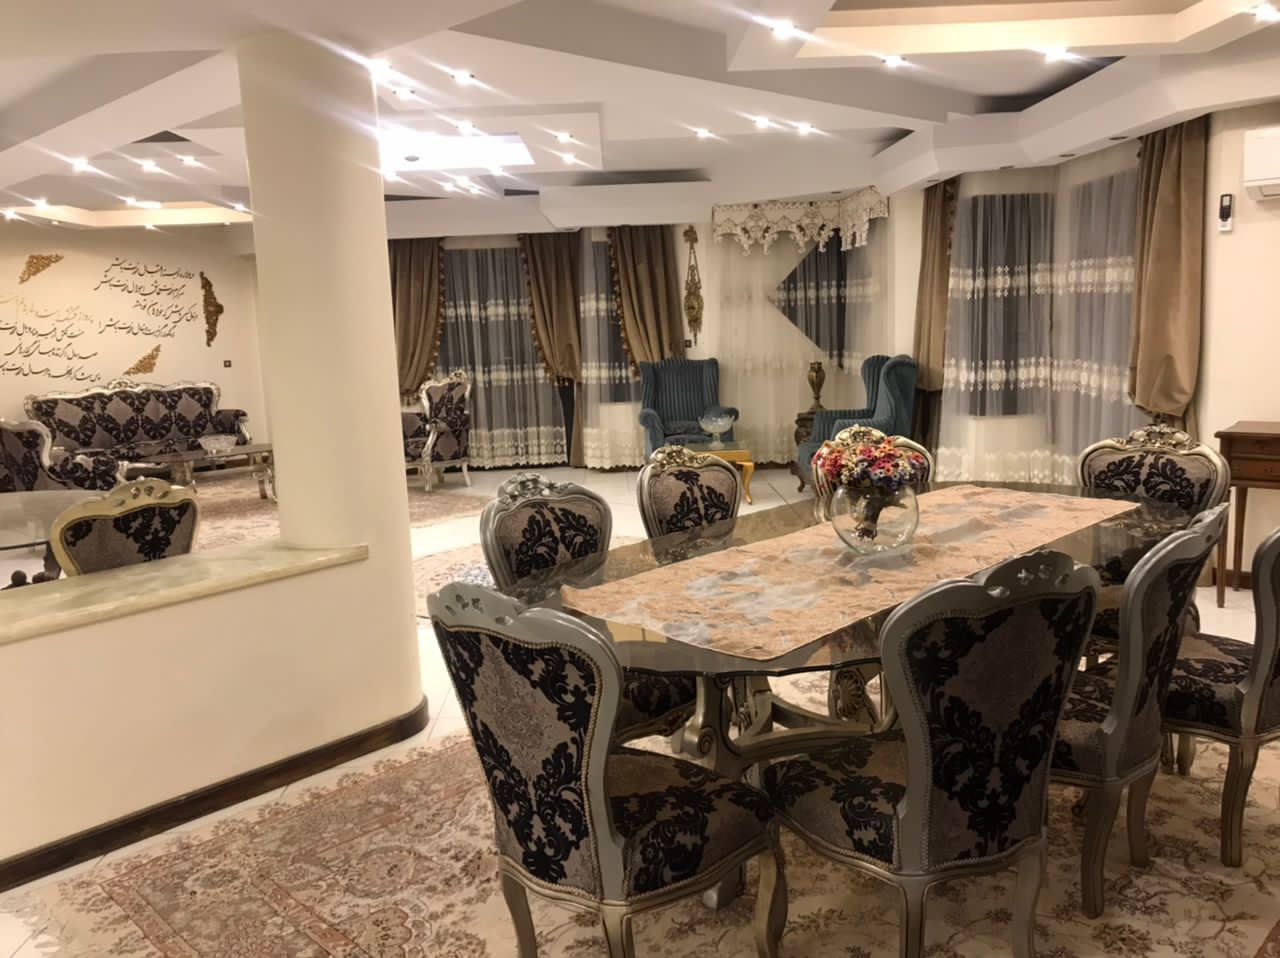 Furnished Flat for renting in Jordan Tehran